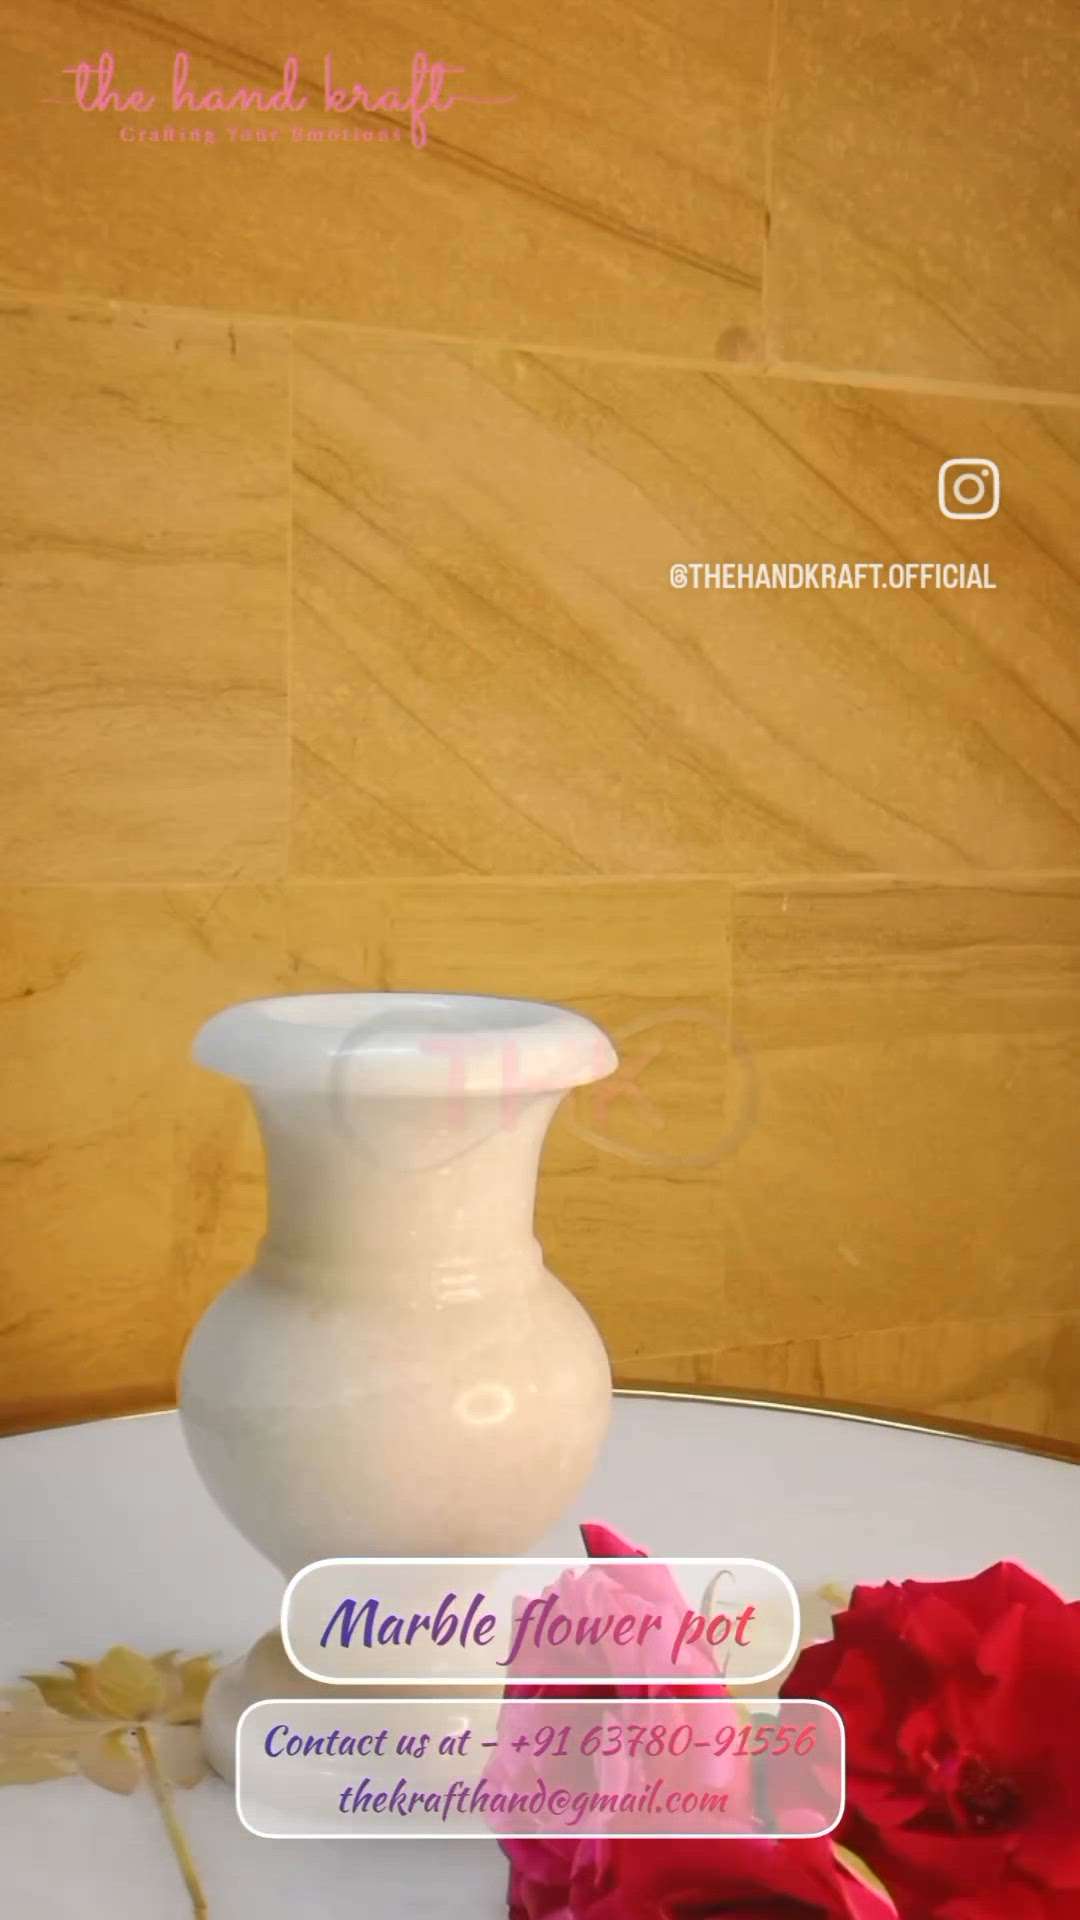 White Marble 💐flower pot ❤️
Contact us at - +91 63780-91556 
thekrafthand@gmail.com  #flowerpot   #flowerpots  #marbleflowerpot   #trendingdesign  #thehandkraft #HomeDecor #

#marble #granite #flowers #flowerpot #new #newdesign #trend ##stone